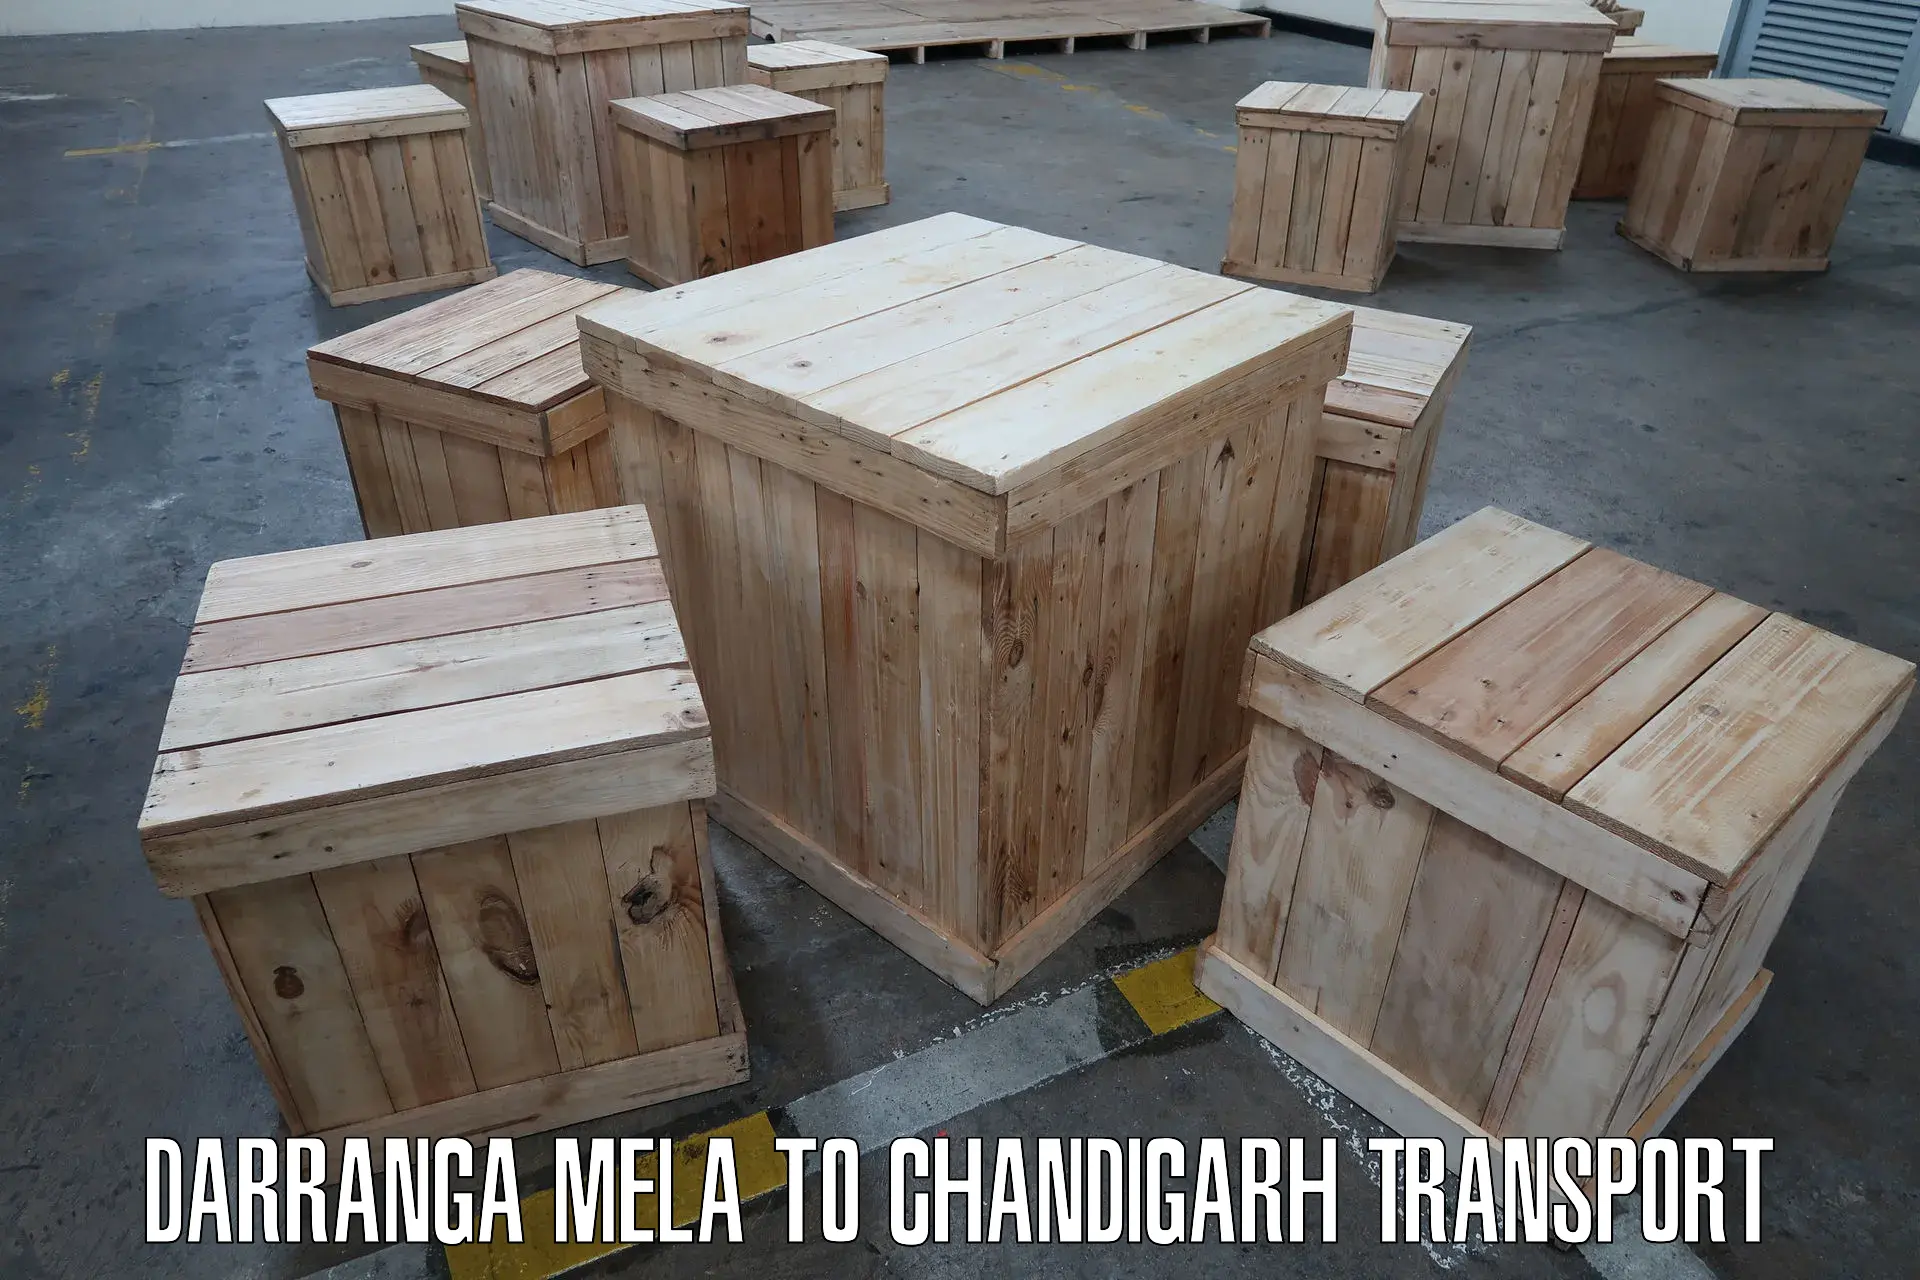 Furniture transport service Darranga Mela to Chandigarh